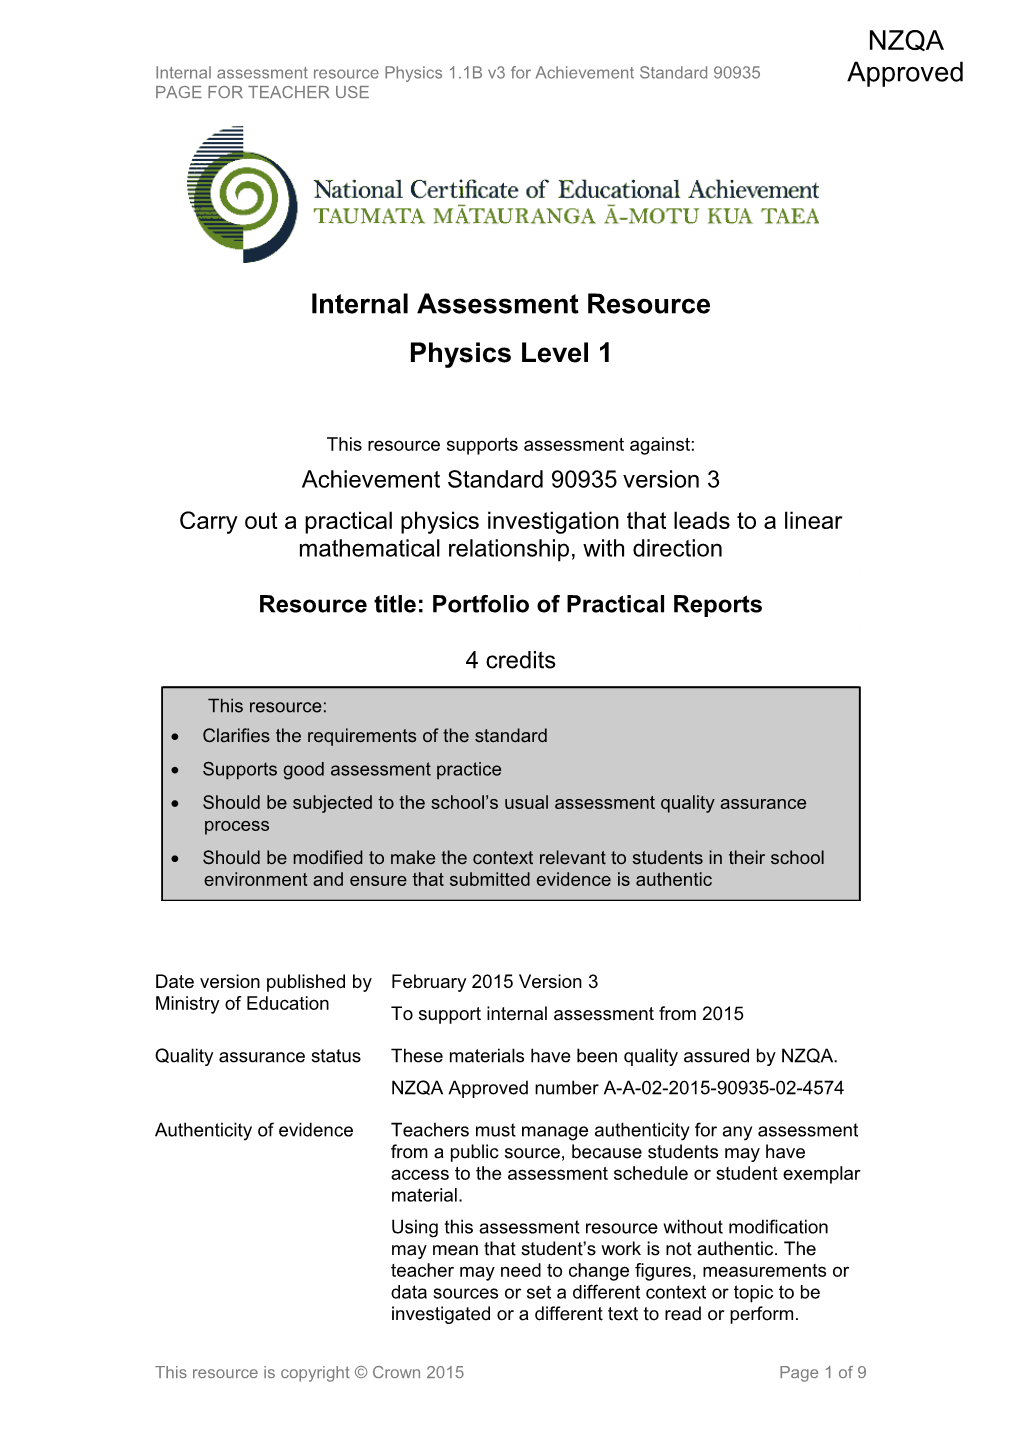 Level 1 Physics Internal Assessment Resource